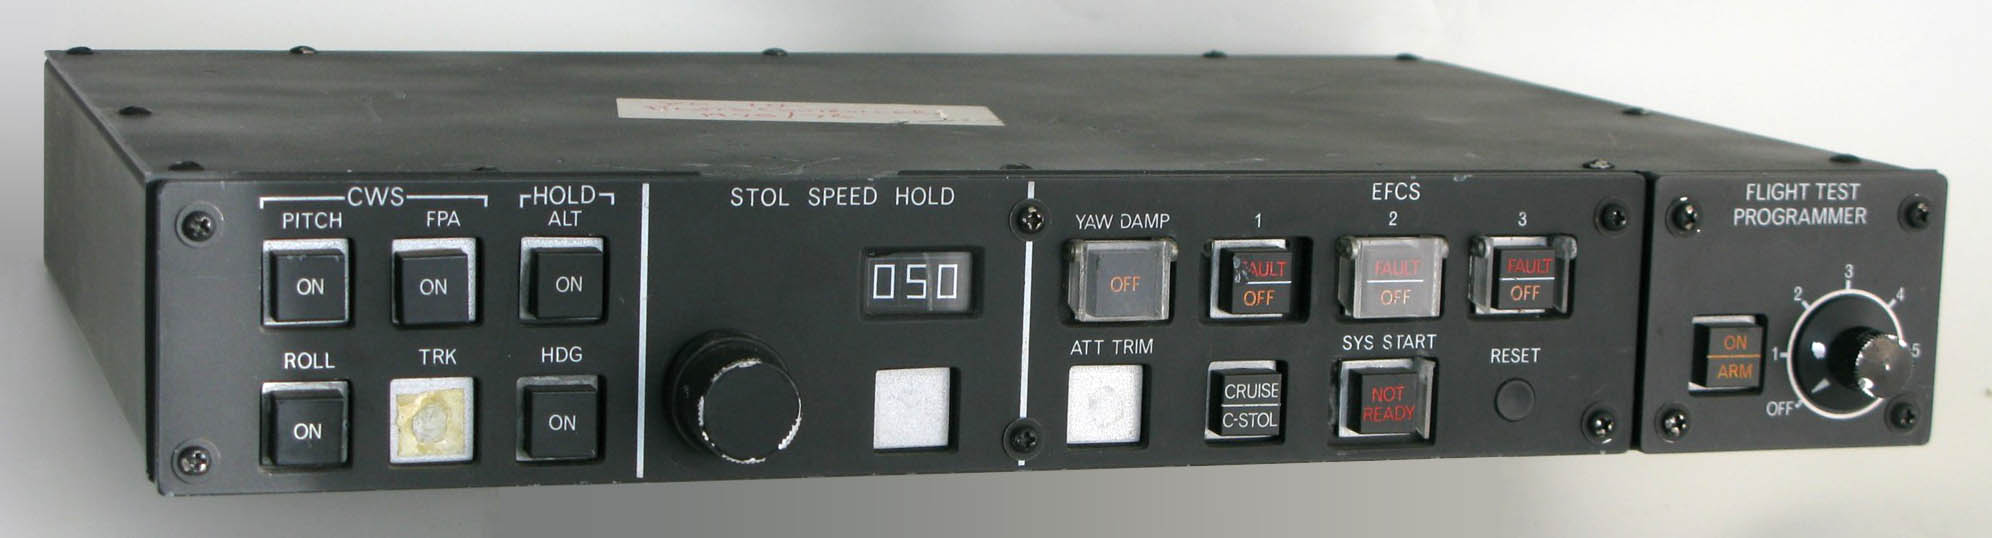 YC-14 FCS Control & Display Panel (space model)